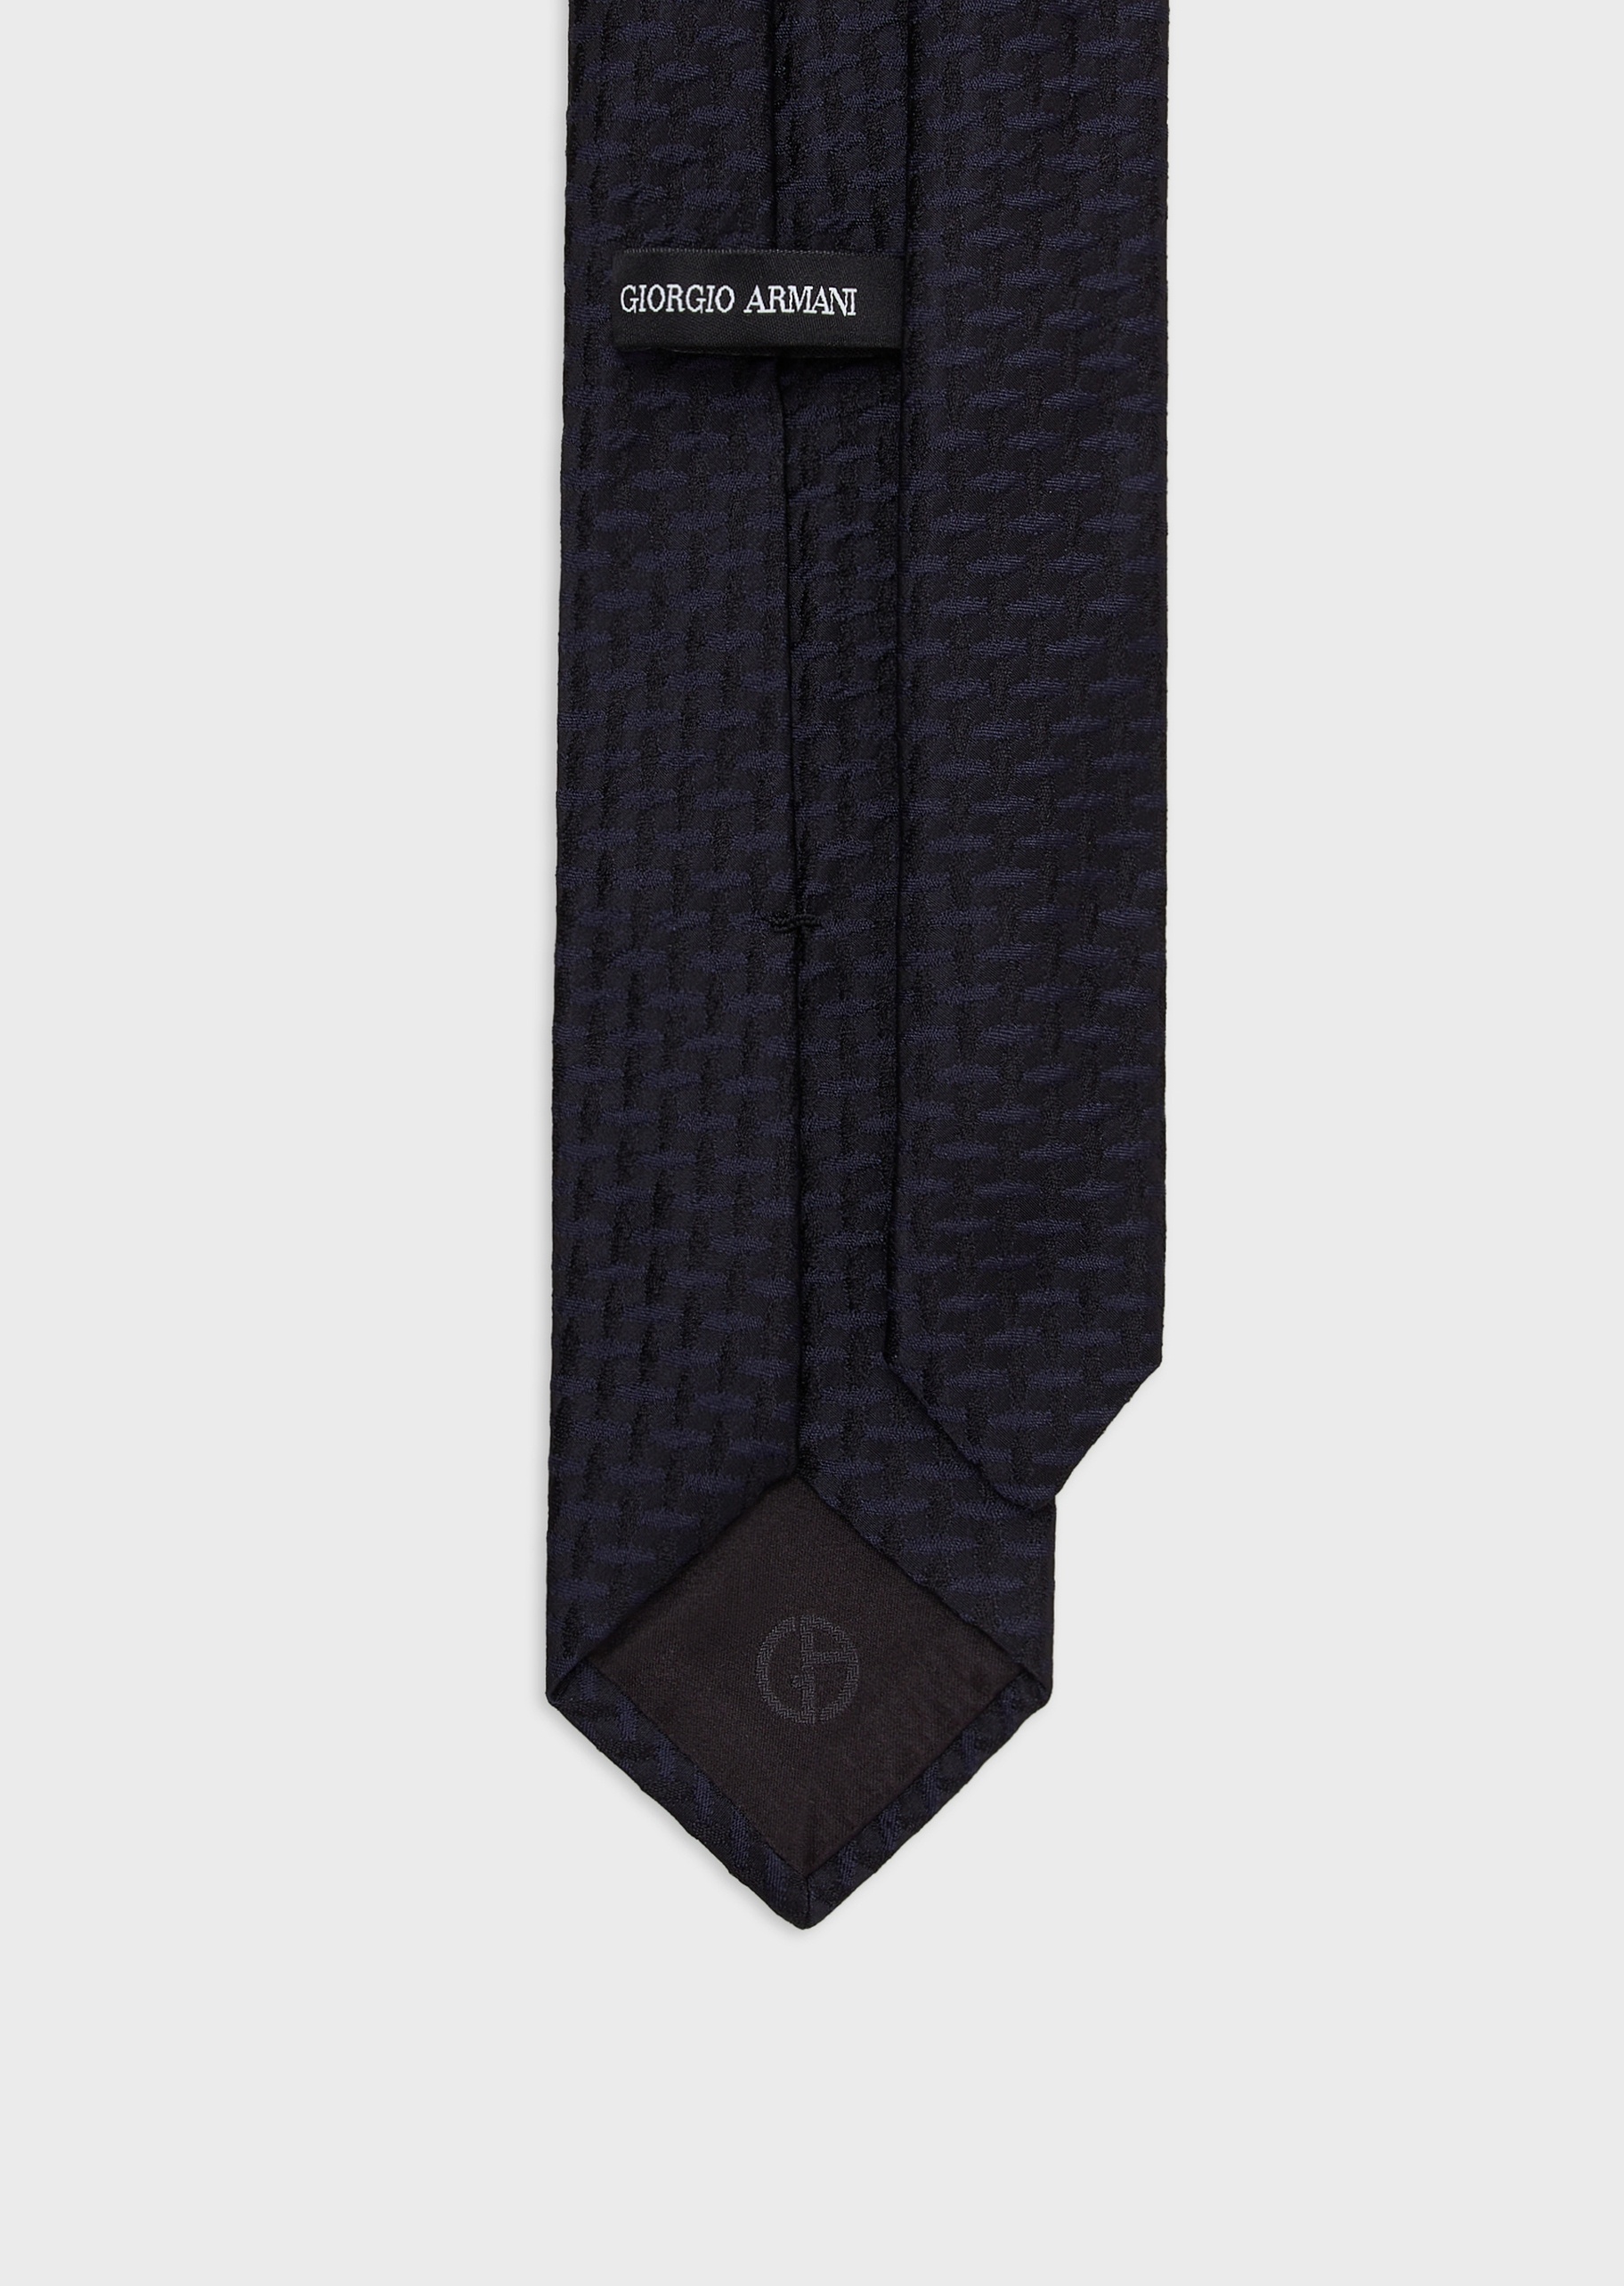 Giorgio Armani 男士休闲商务桑蚕丝几何编织提花领带